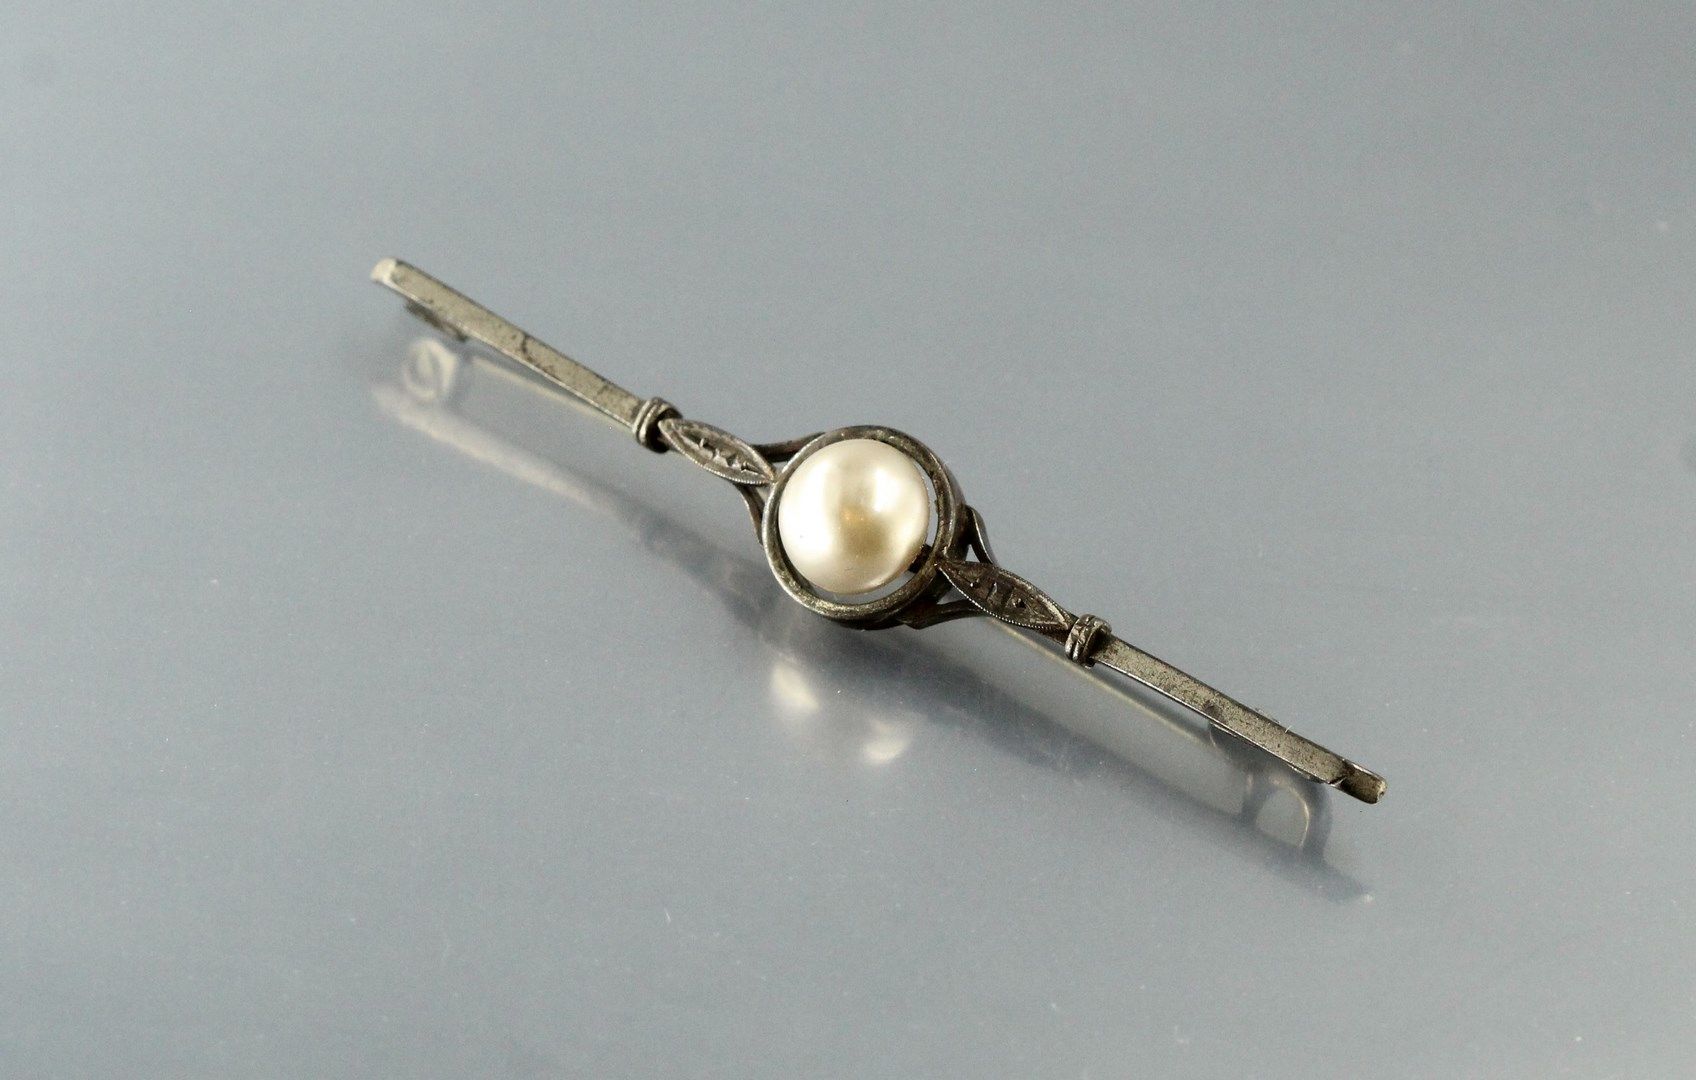 Null Broche barette en argent (Sanglier) sertie d'une perle baroque. Vers 1930.
&hellip;